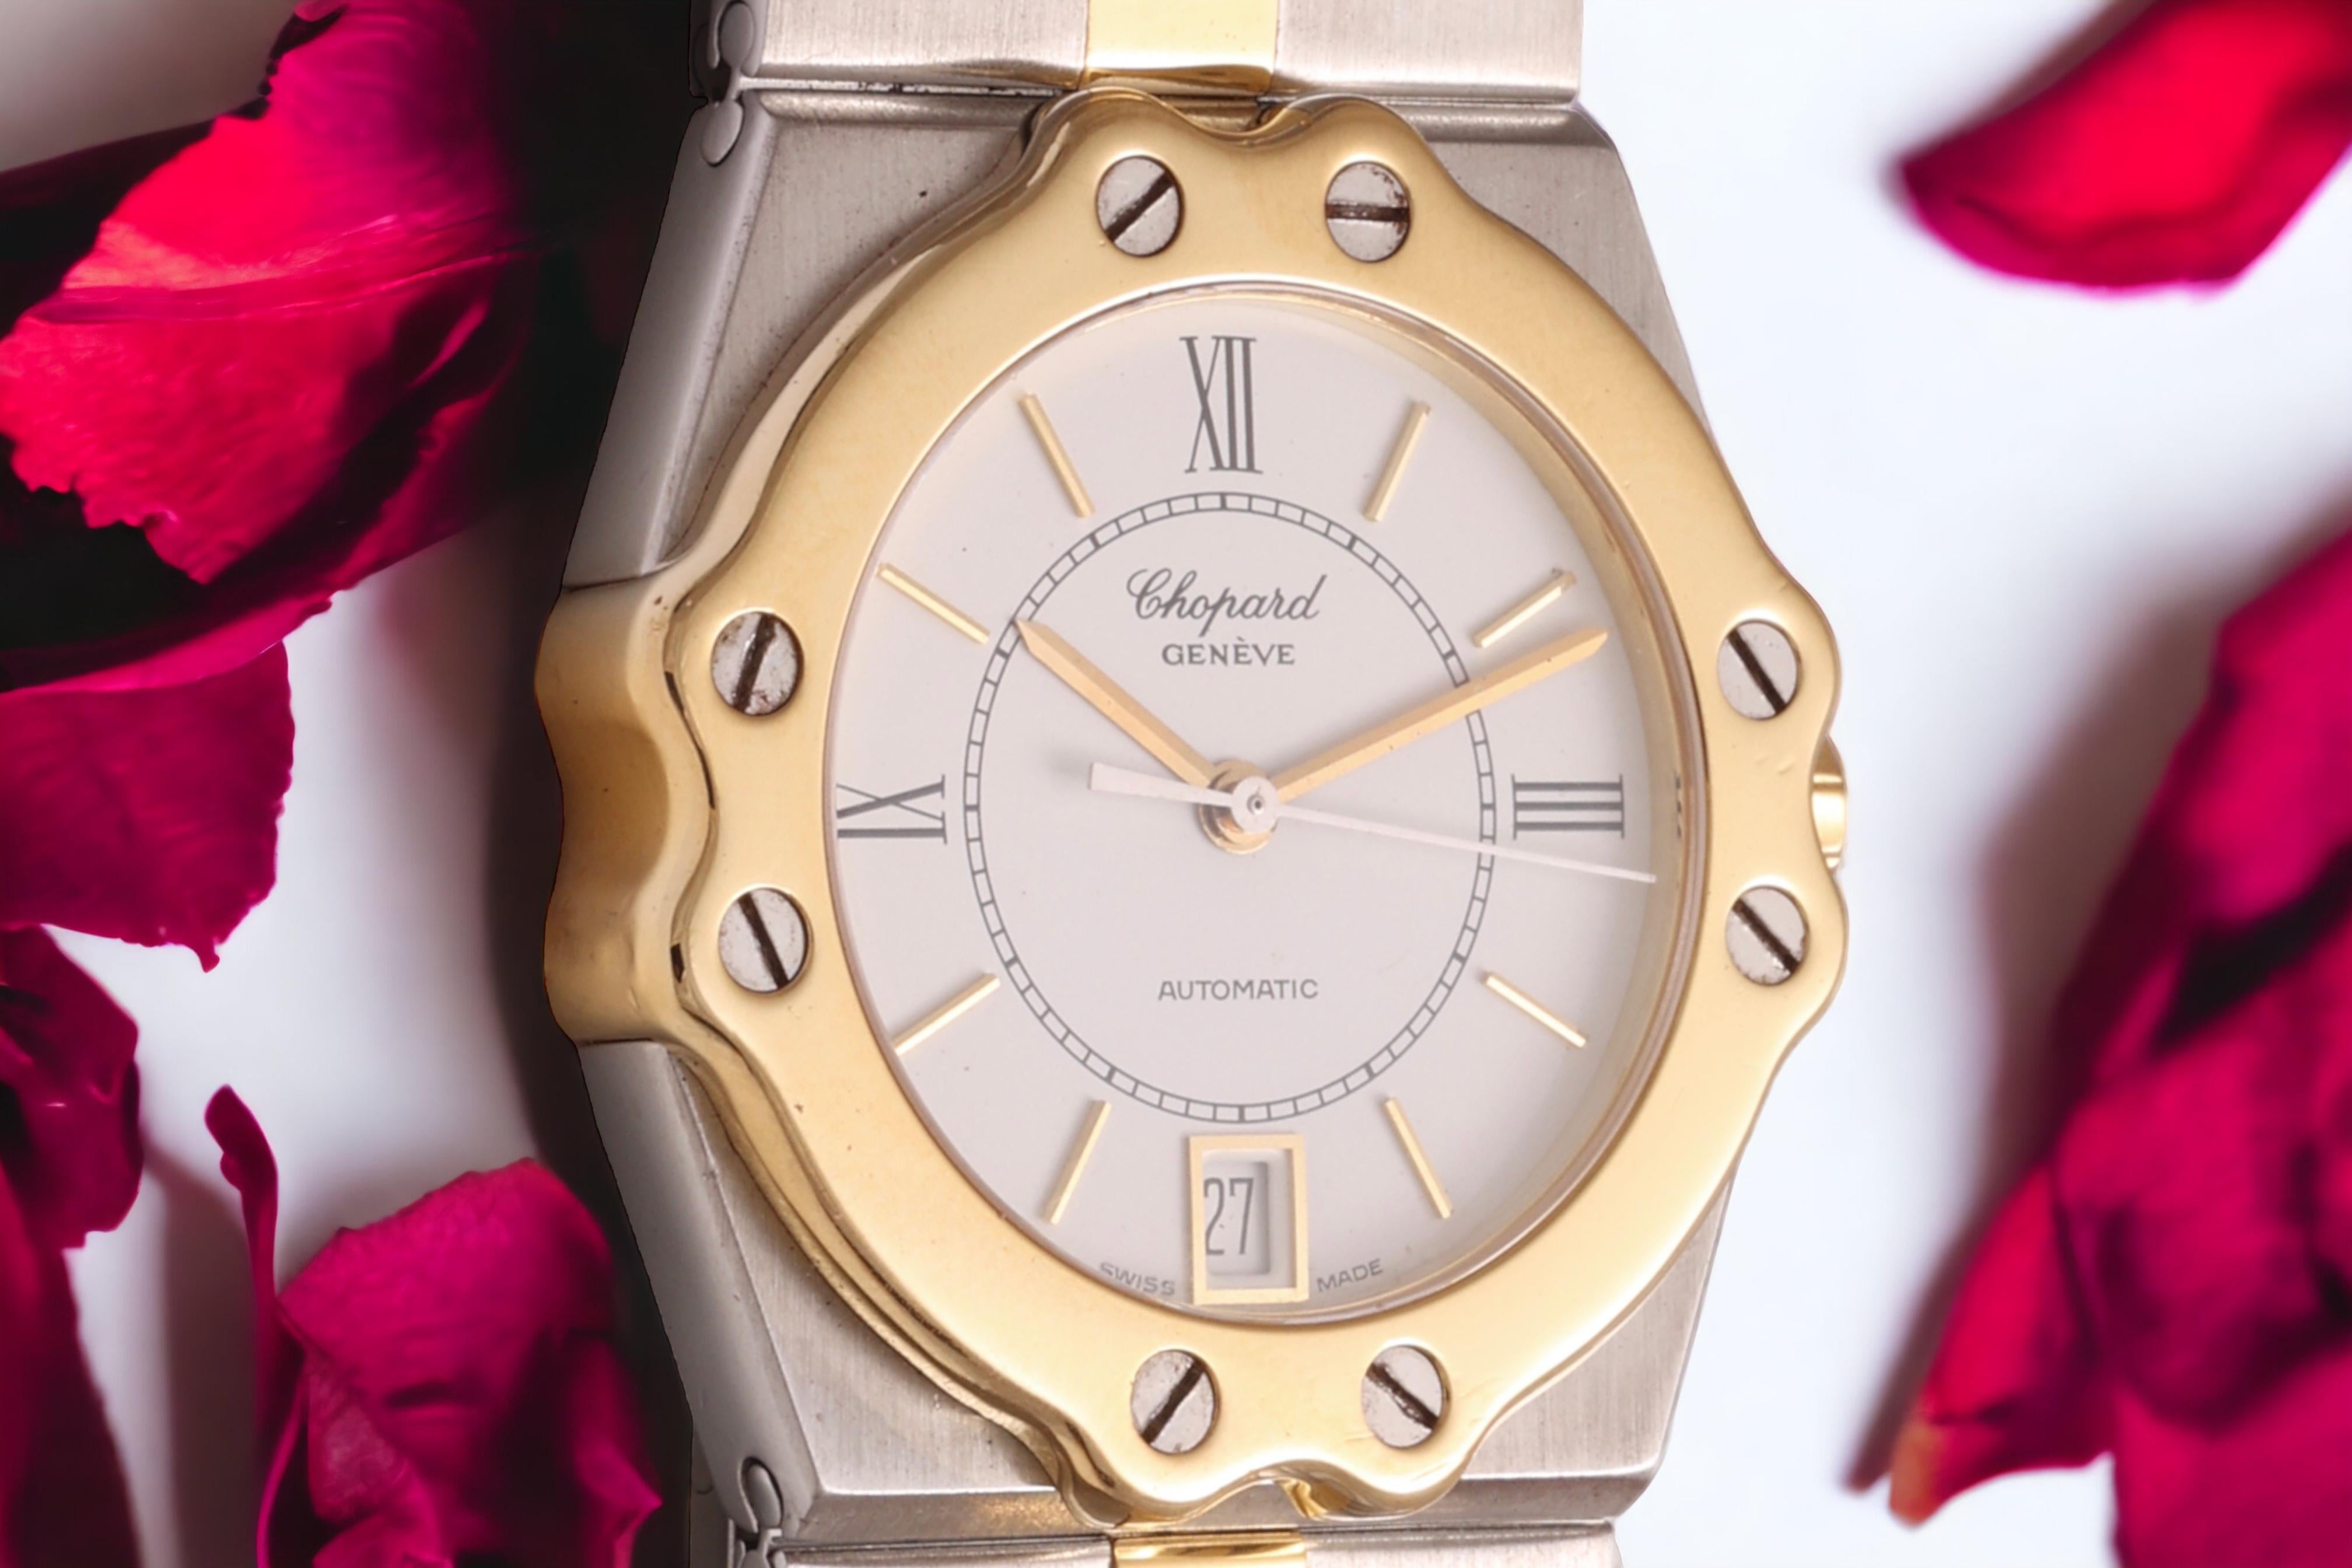 Gold & Steel Chopard St Moritz Automatic Wrist Watch For Sale 10